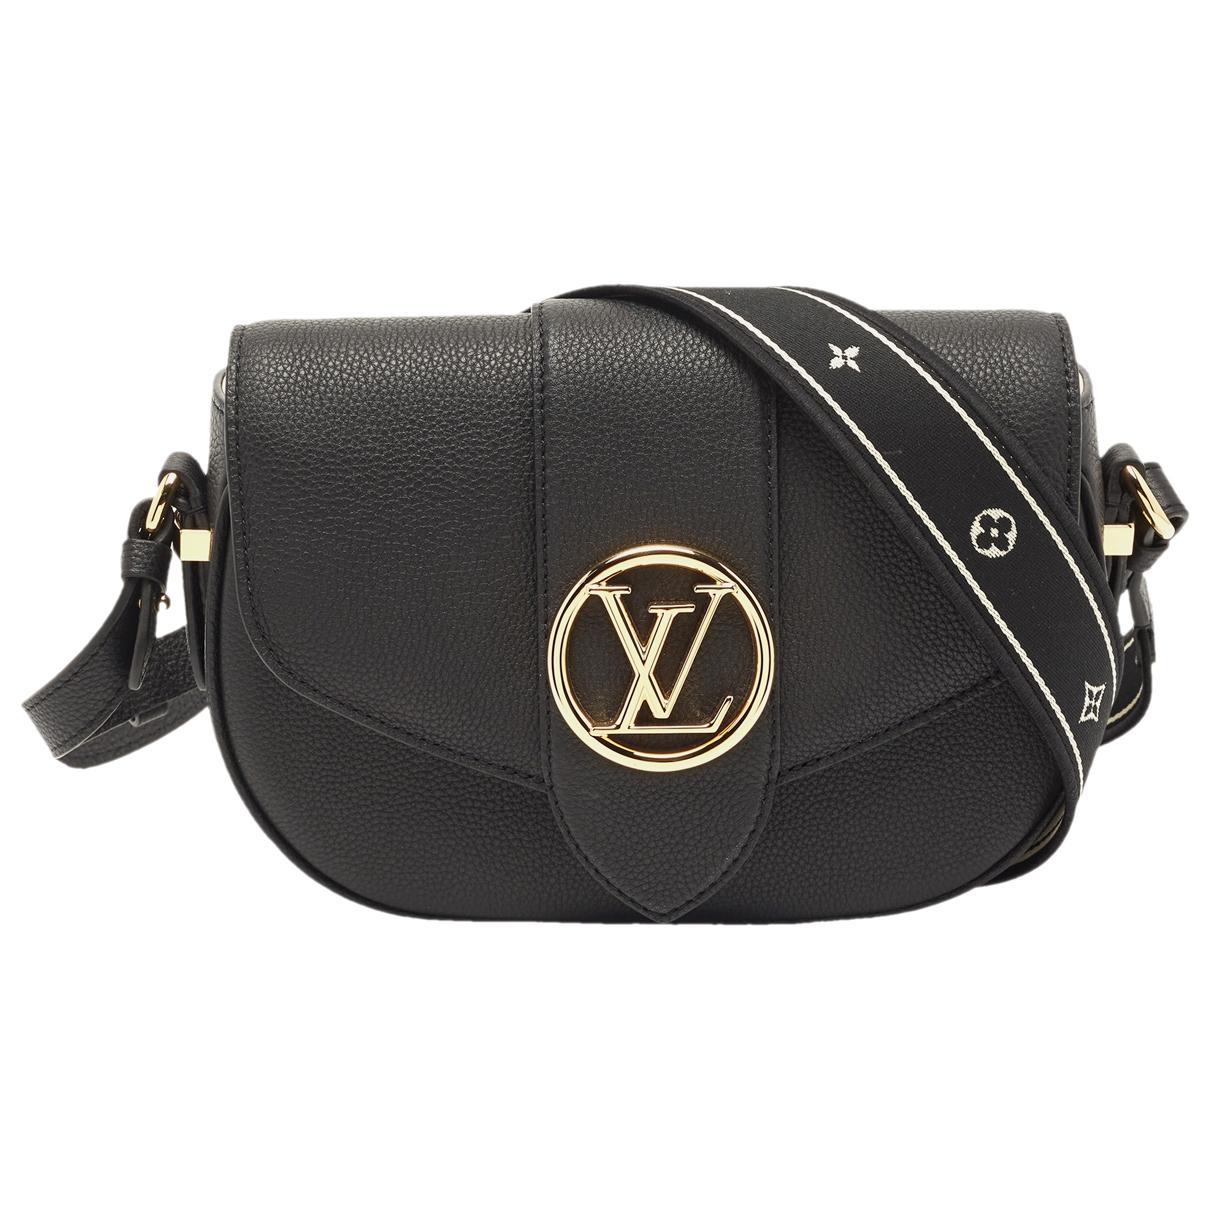 Carmel leather handbag Louis Vuitton Black in Leather - 31309736